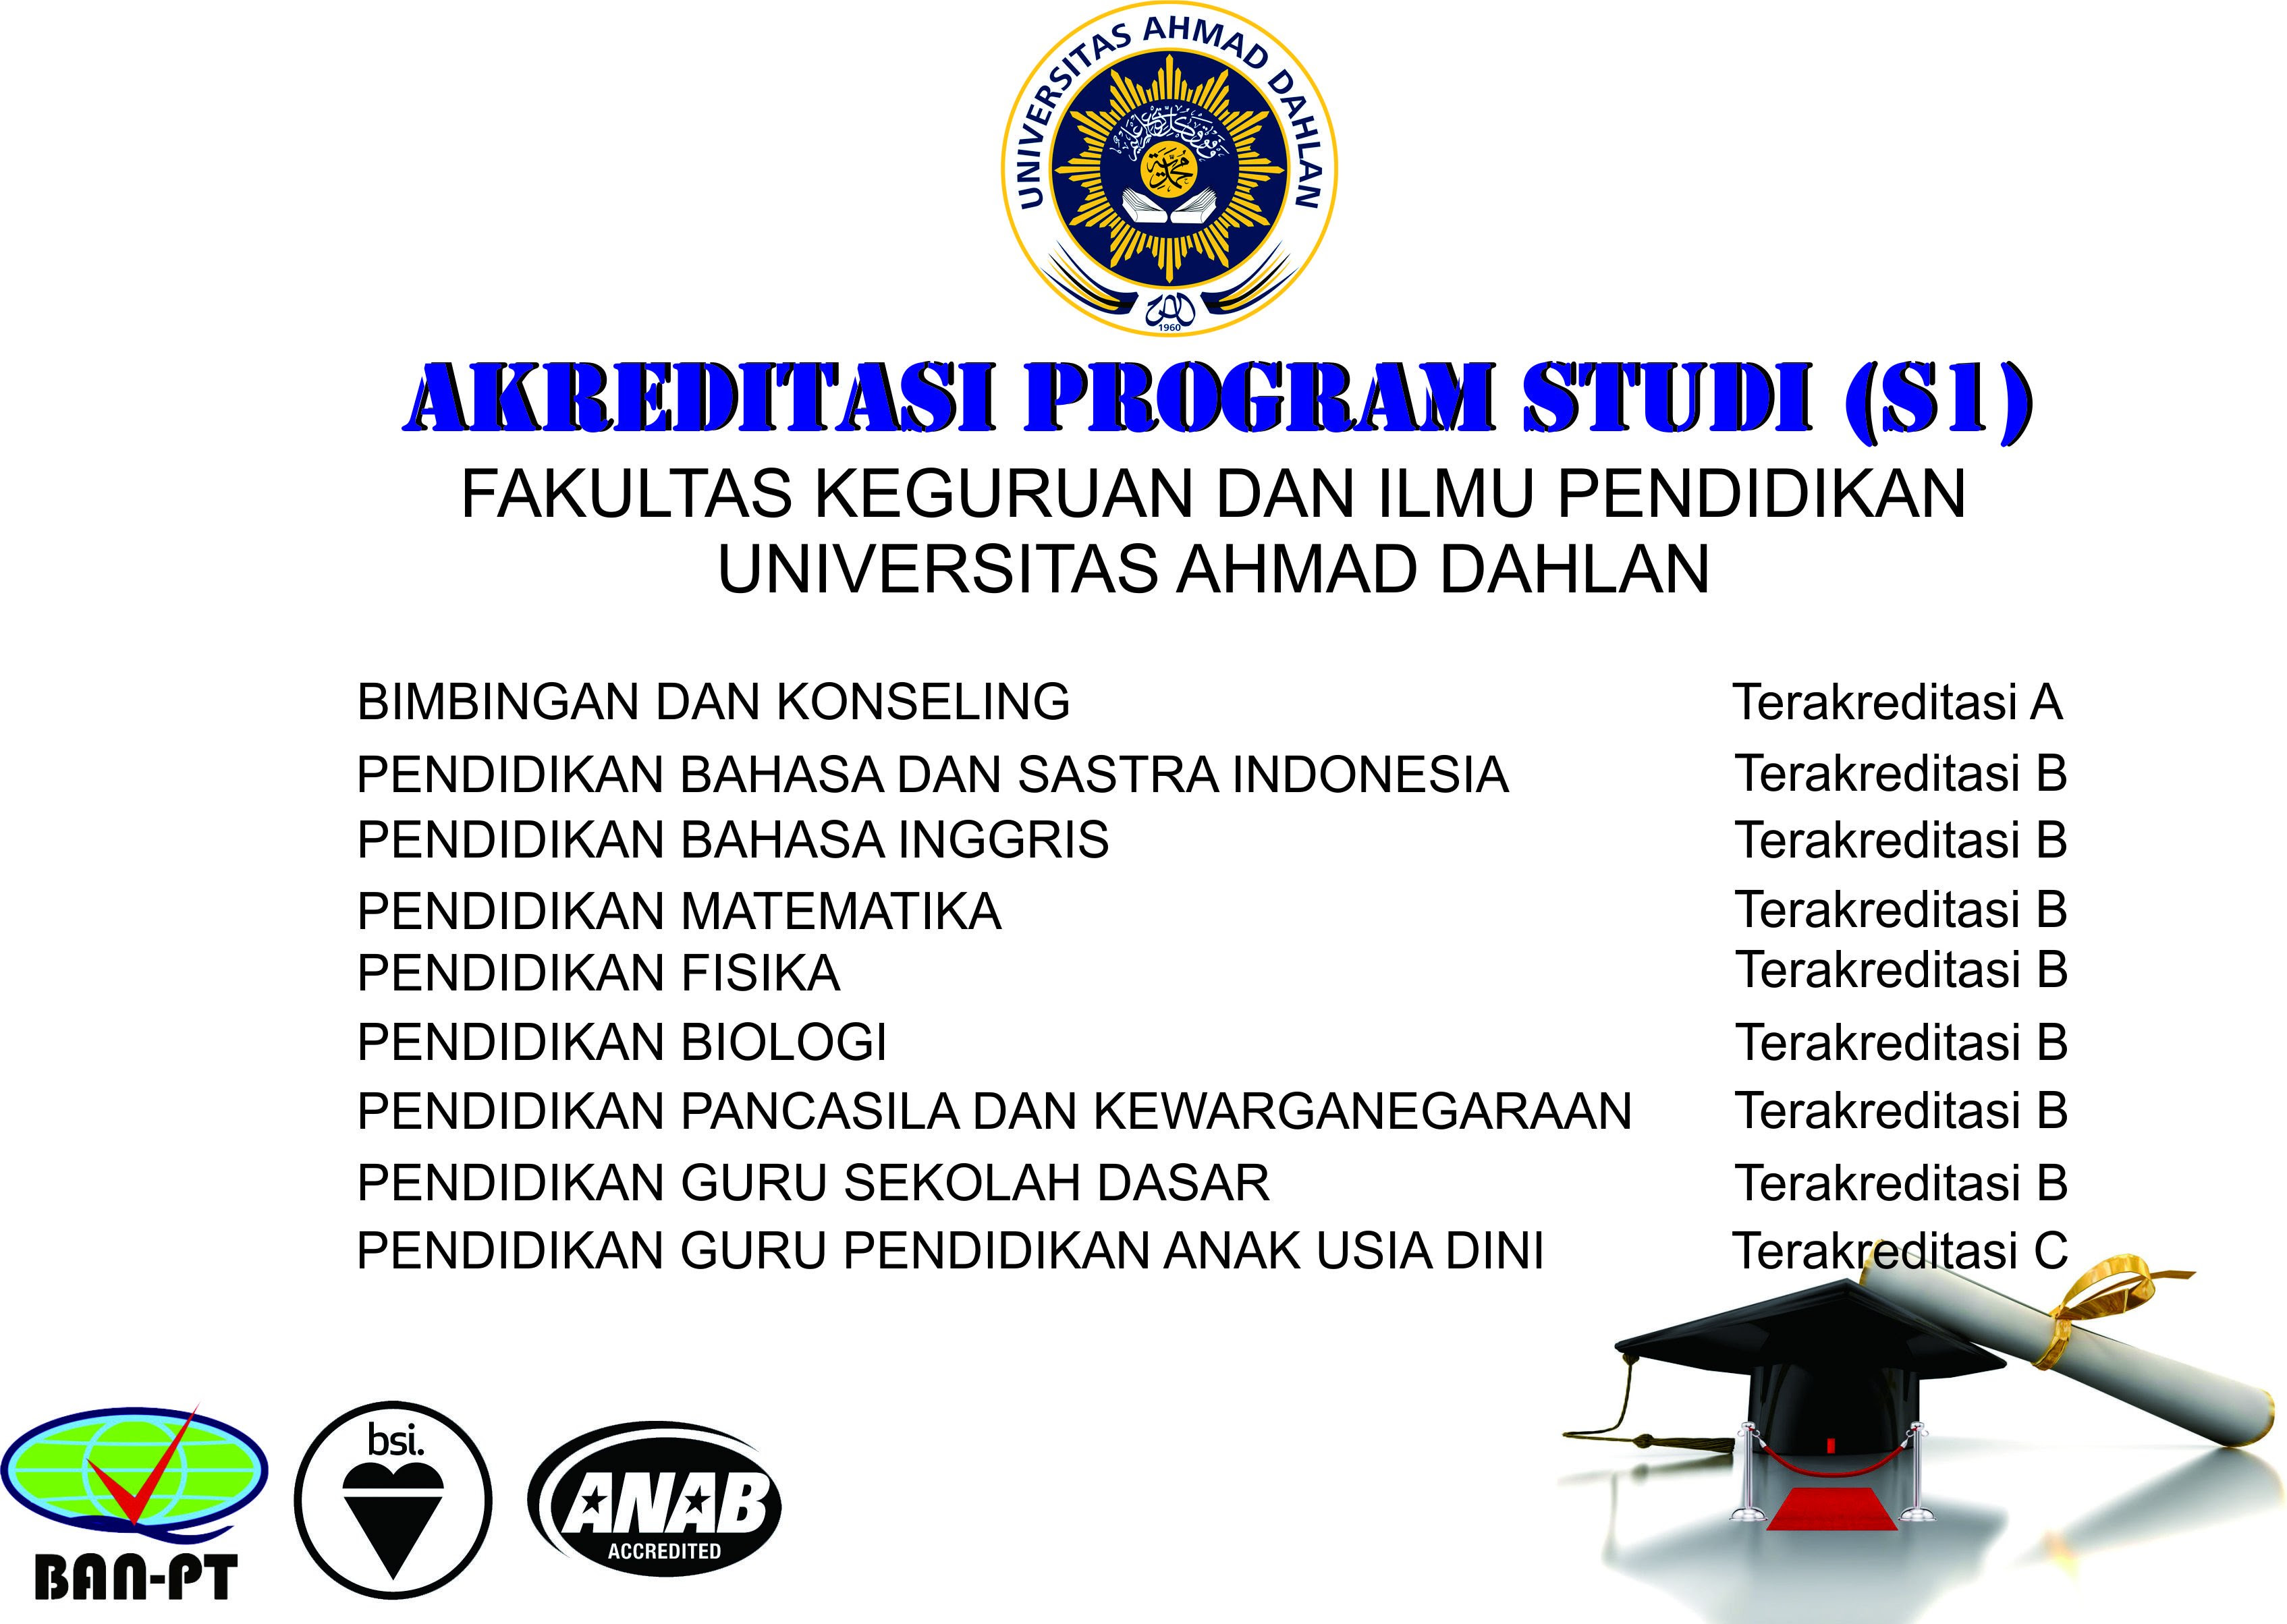 Universitas Ahmad Dahlan UAD merupakan pengembangan dari Institut Keguruan dan Ilmu Pendidikan IKIP Muhammadiyah Yogyakarta Institut Keguruan dan Ilmu